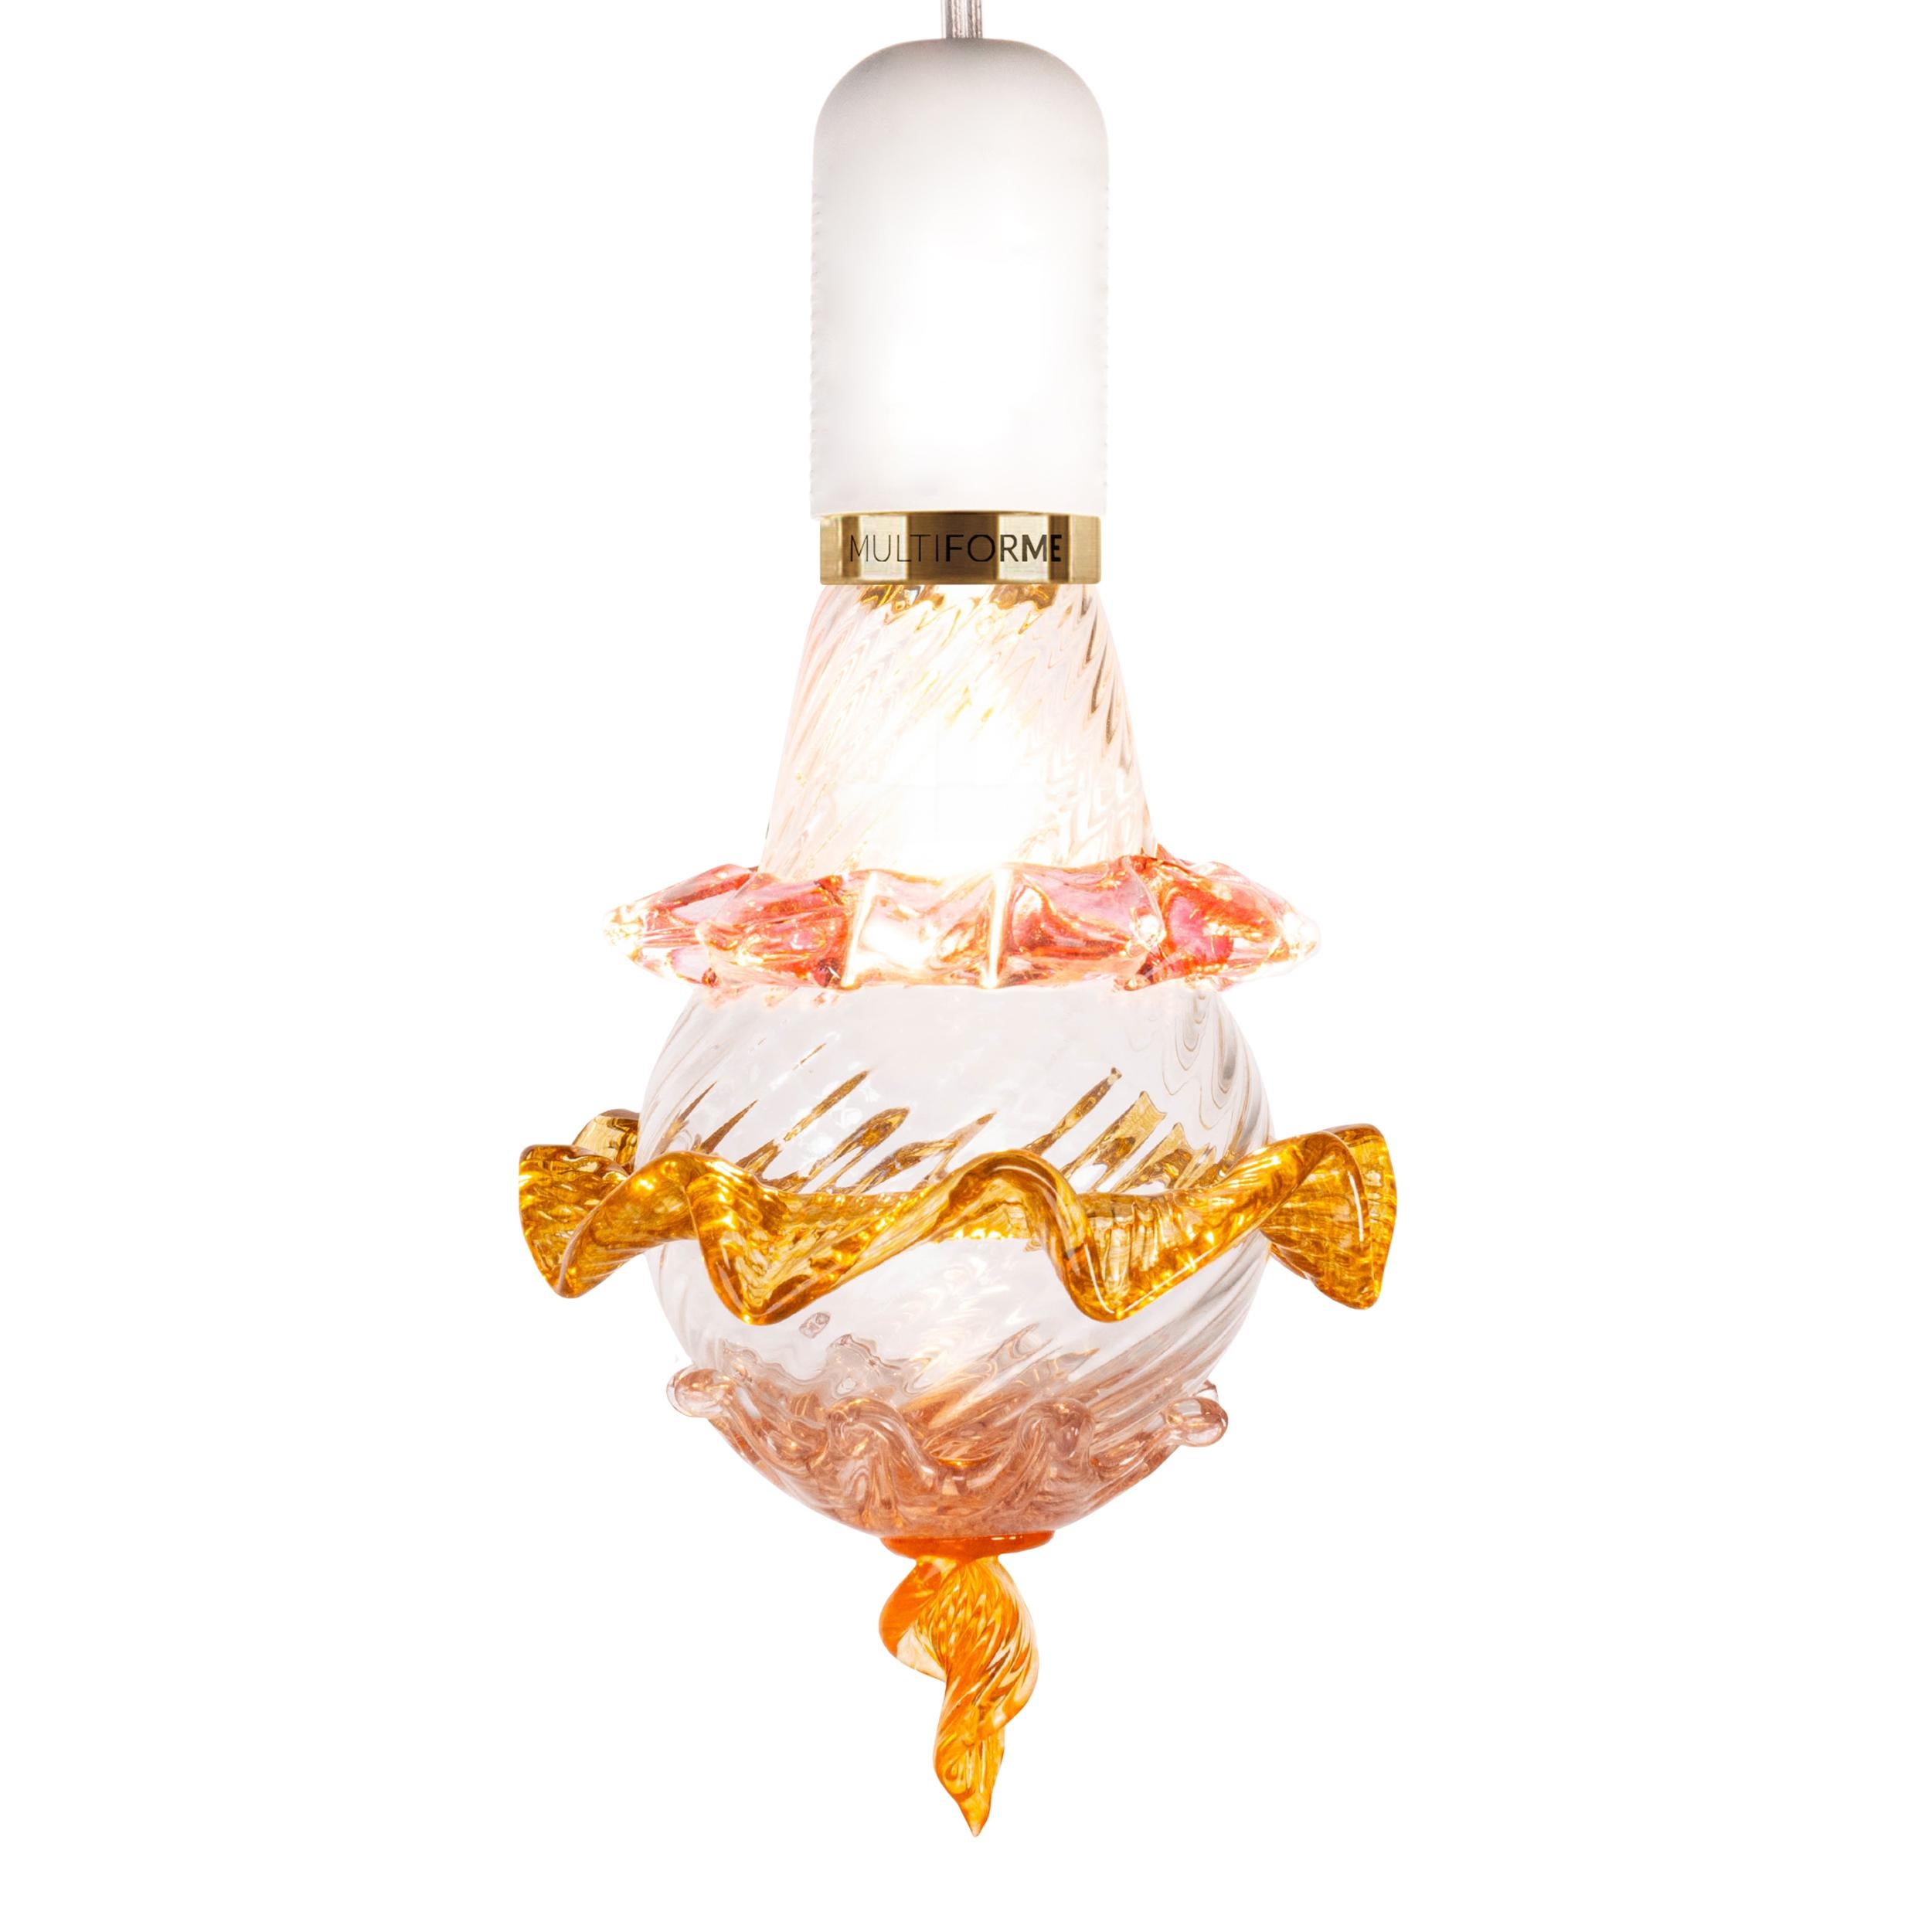 Contemporary Artistic glass lightbulb chandelier Murano Bulb Marcantonio X Multiforme #09 For Sale